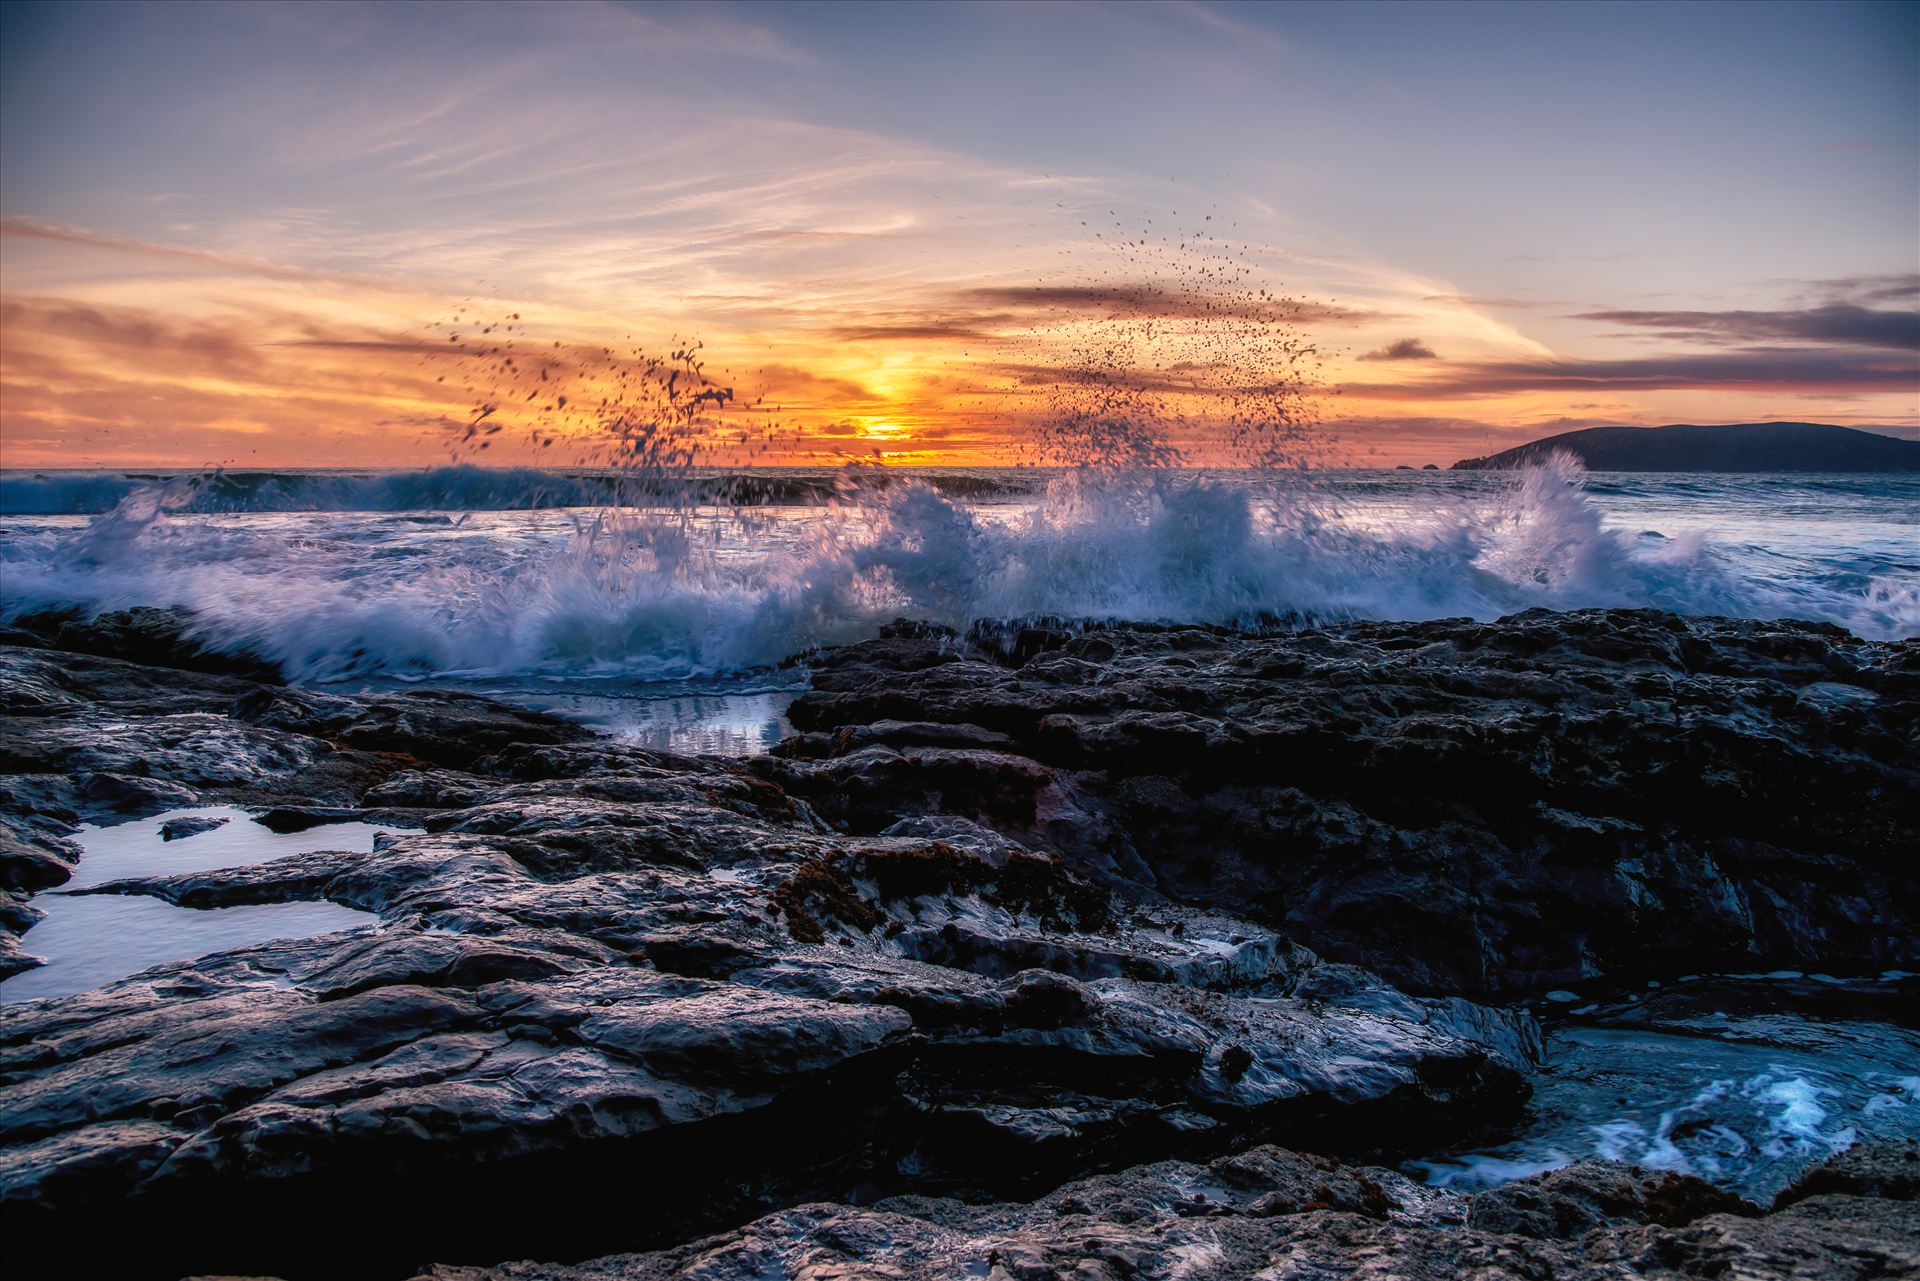 Shell Beach Cliffs Wave Break.jpg  by Sarah Williams